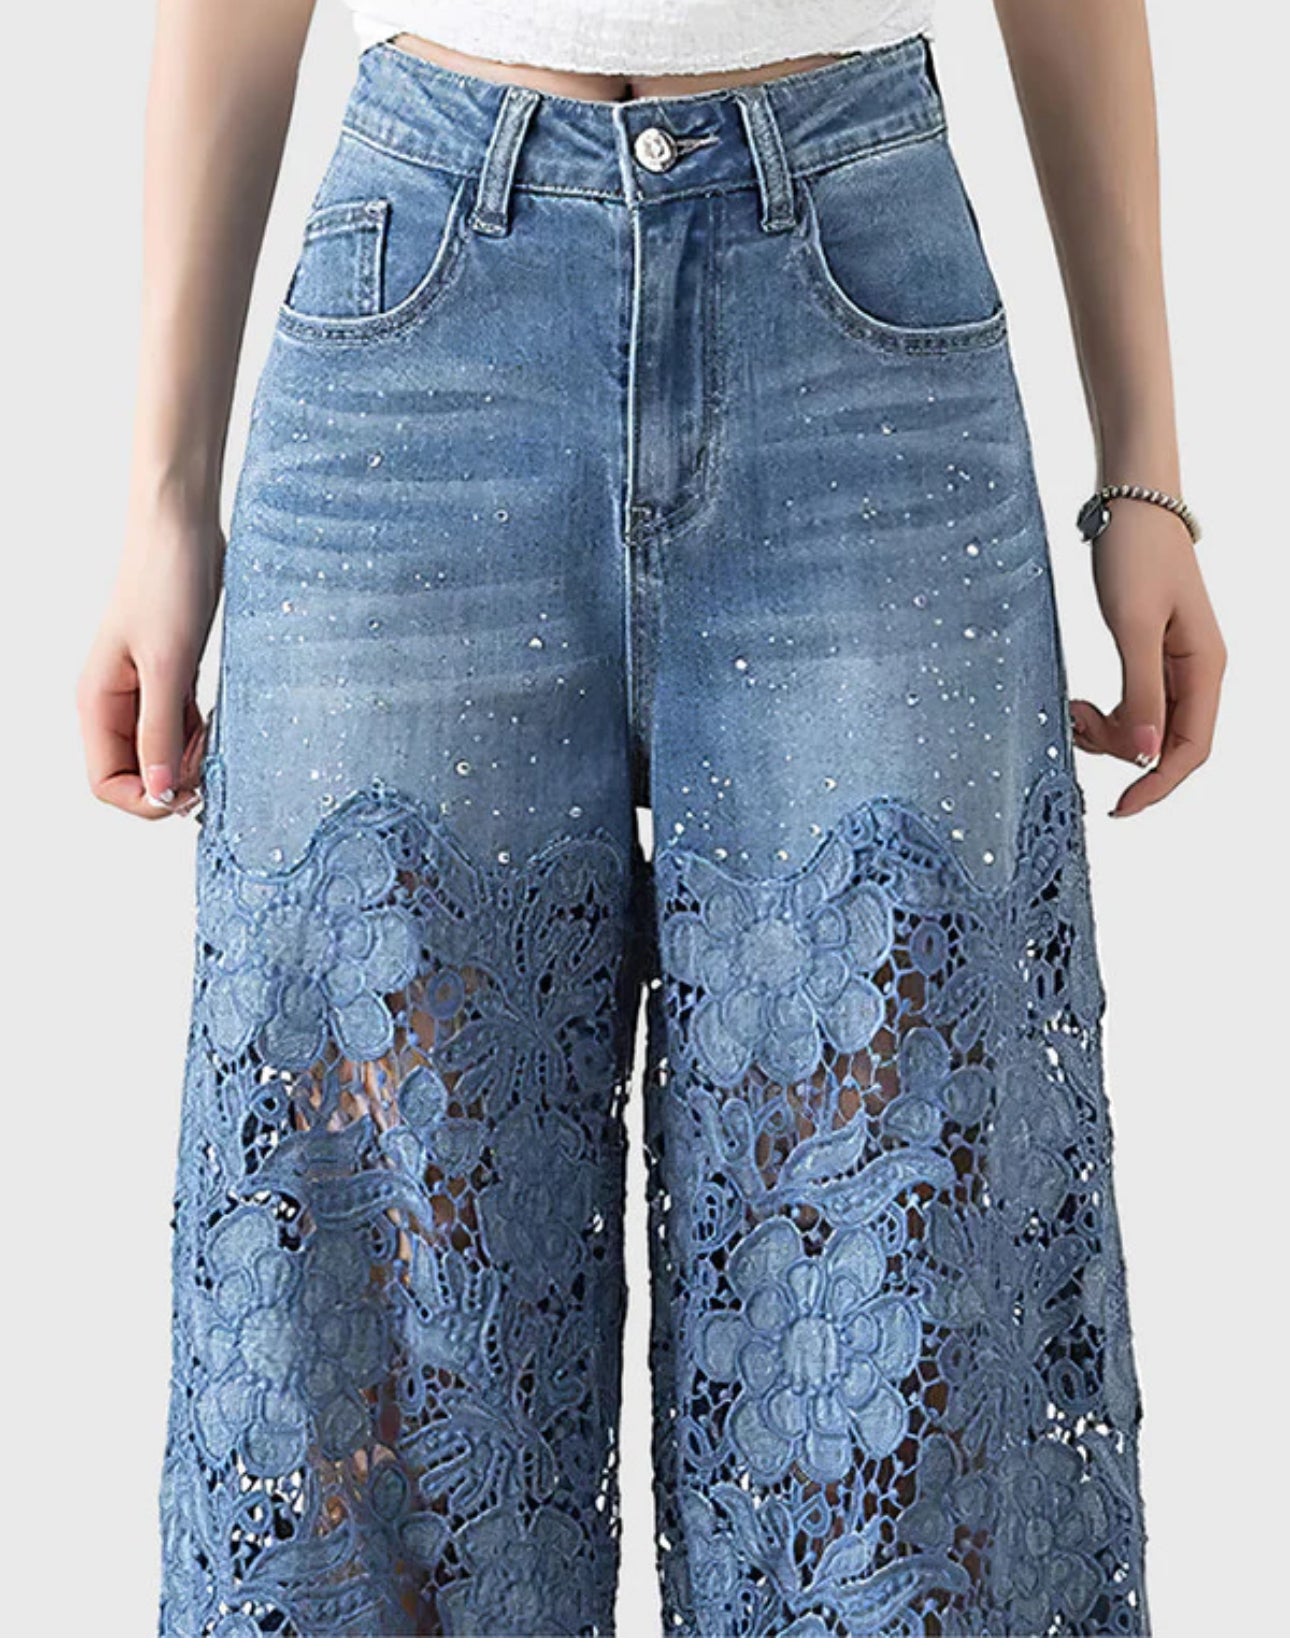 Alejandrinas Embroidered Jeans